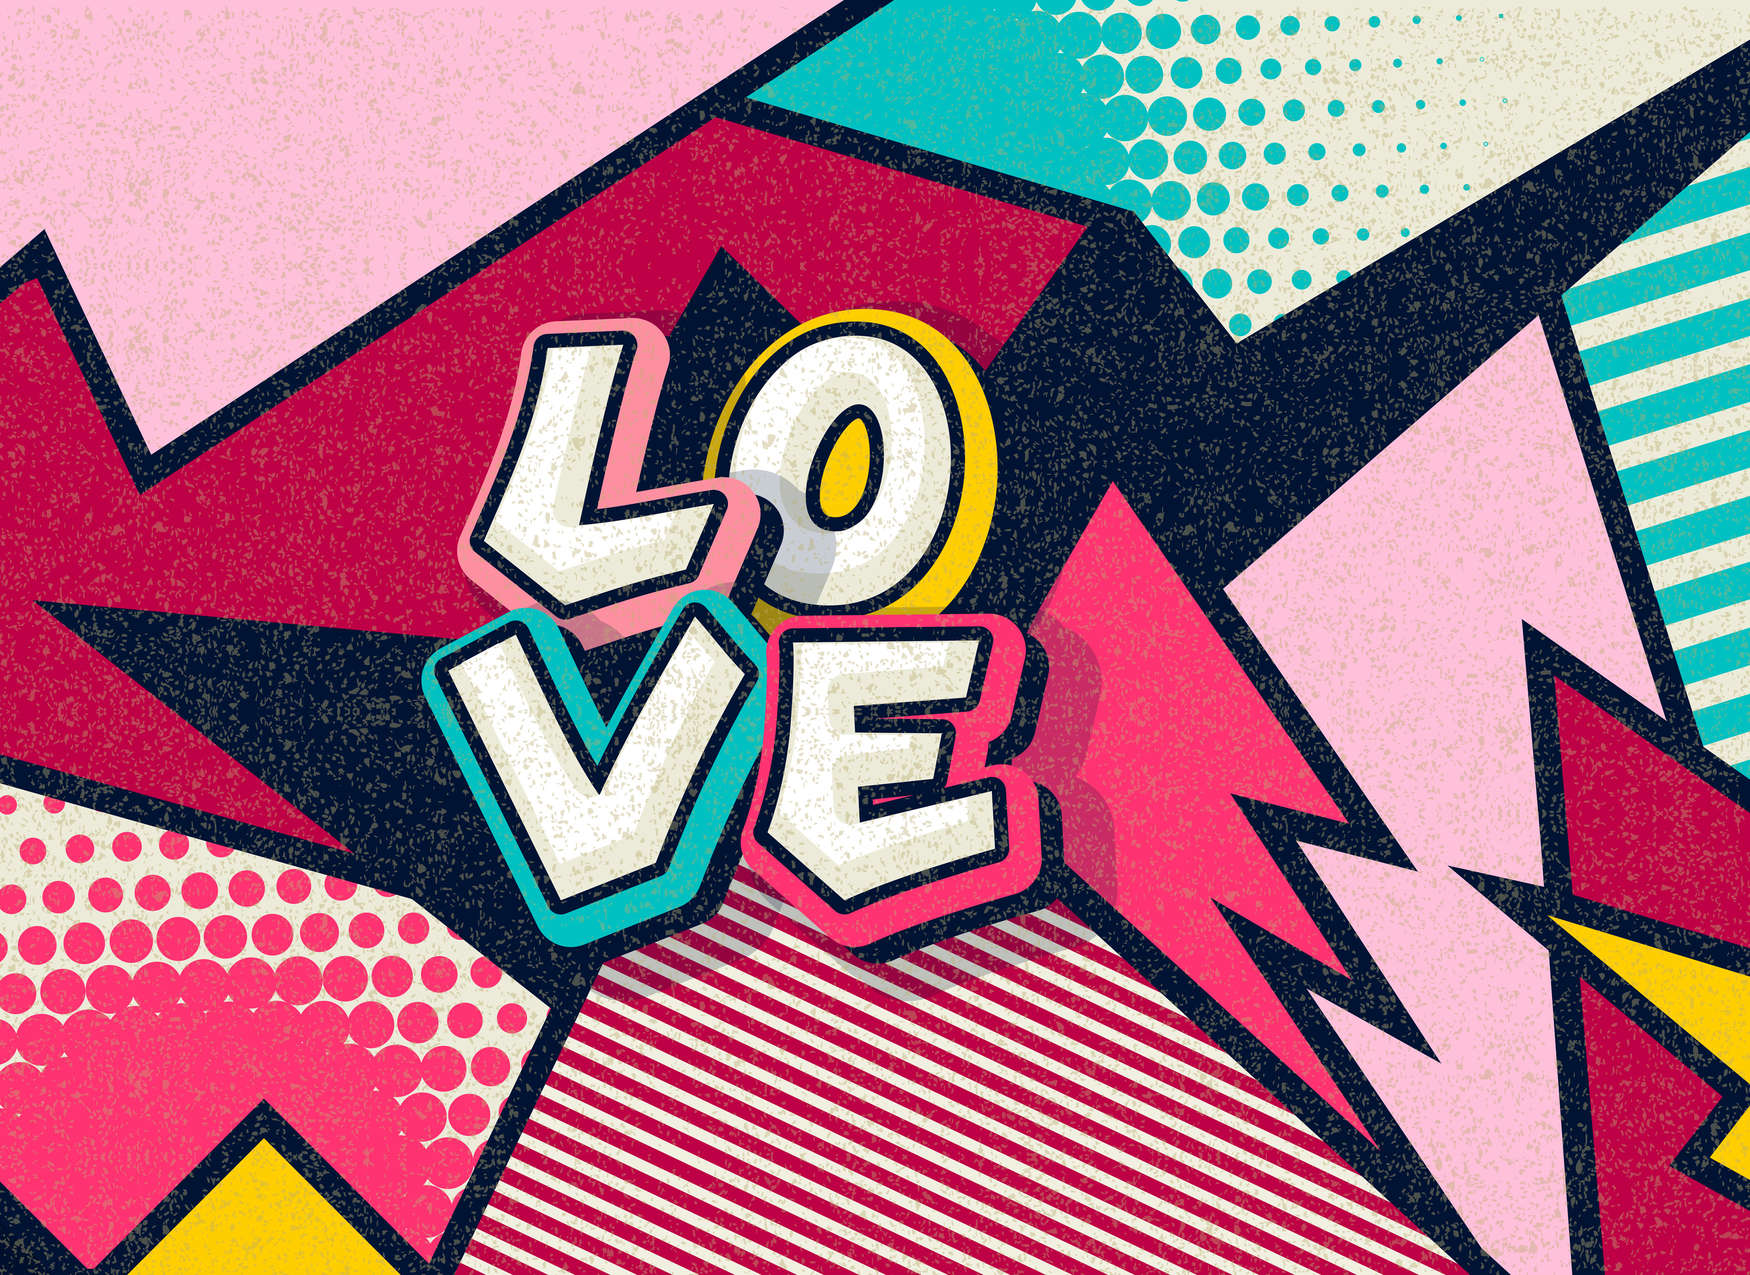             Comic Style Pop Up Love Wallpaper - Bont
        